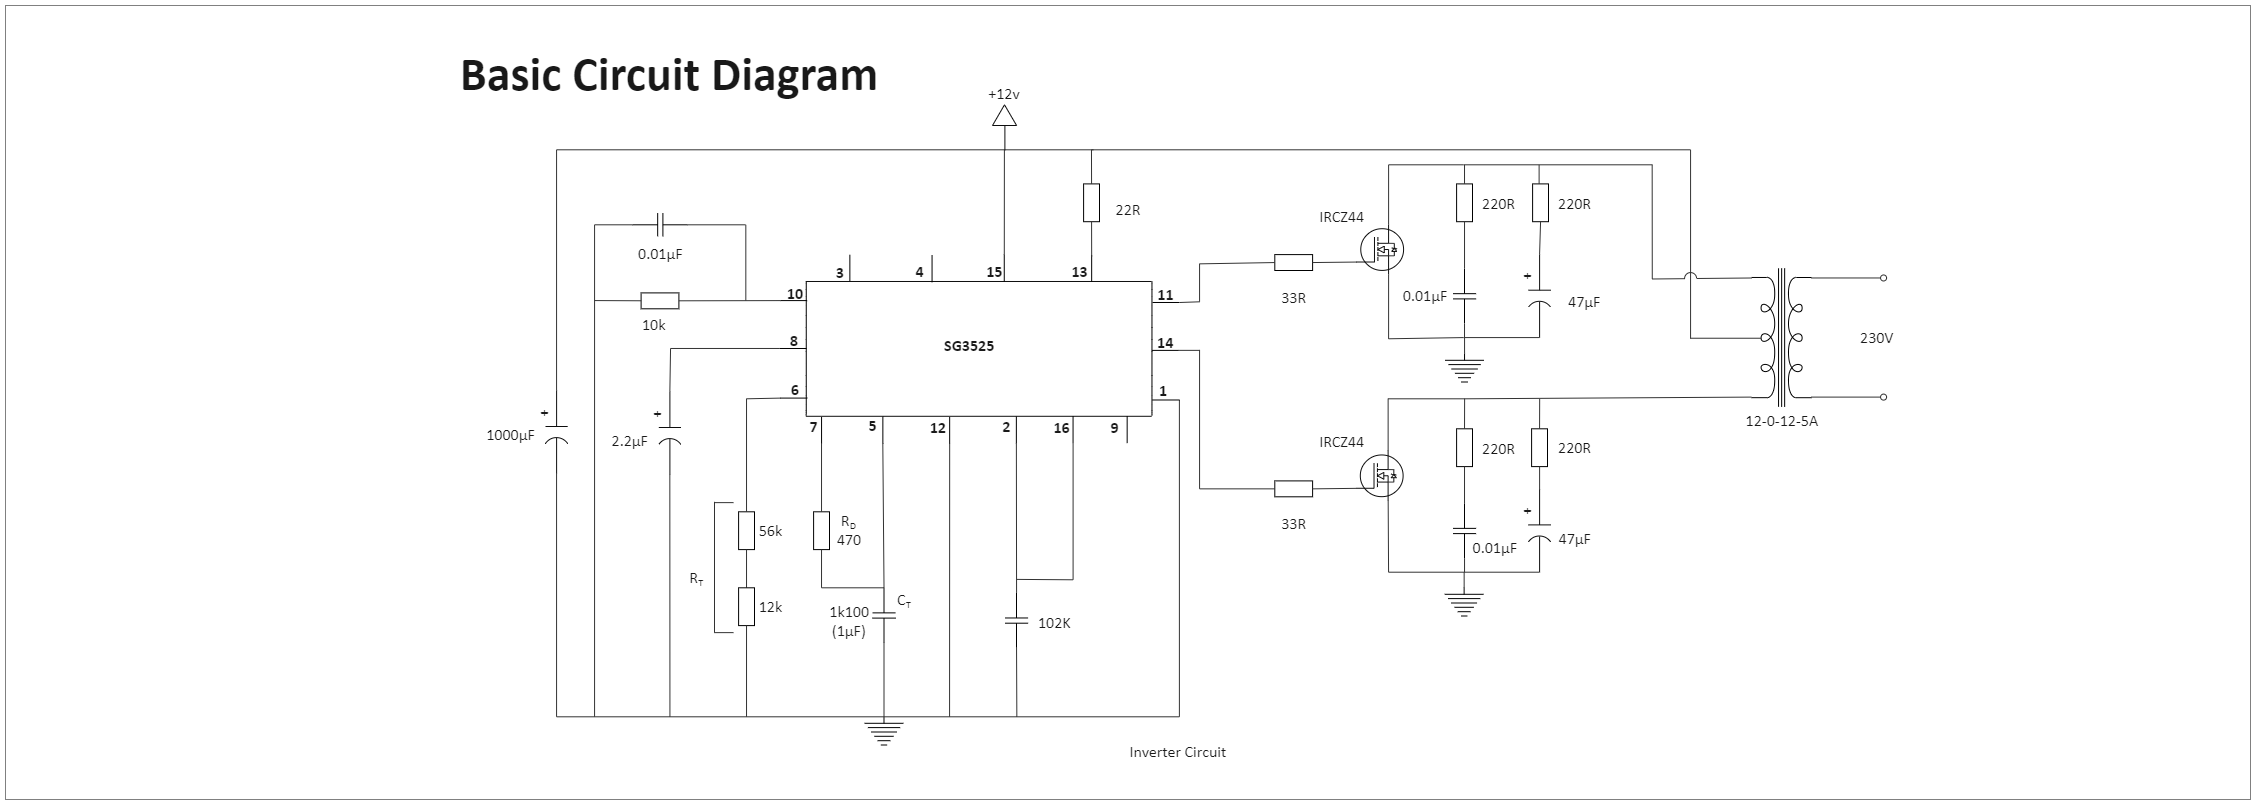 Basic Circuit Diagram | EdrawMax Template